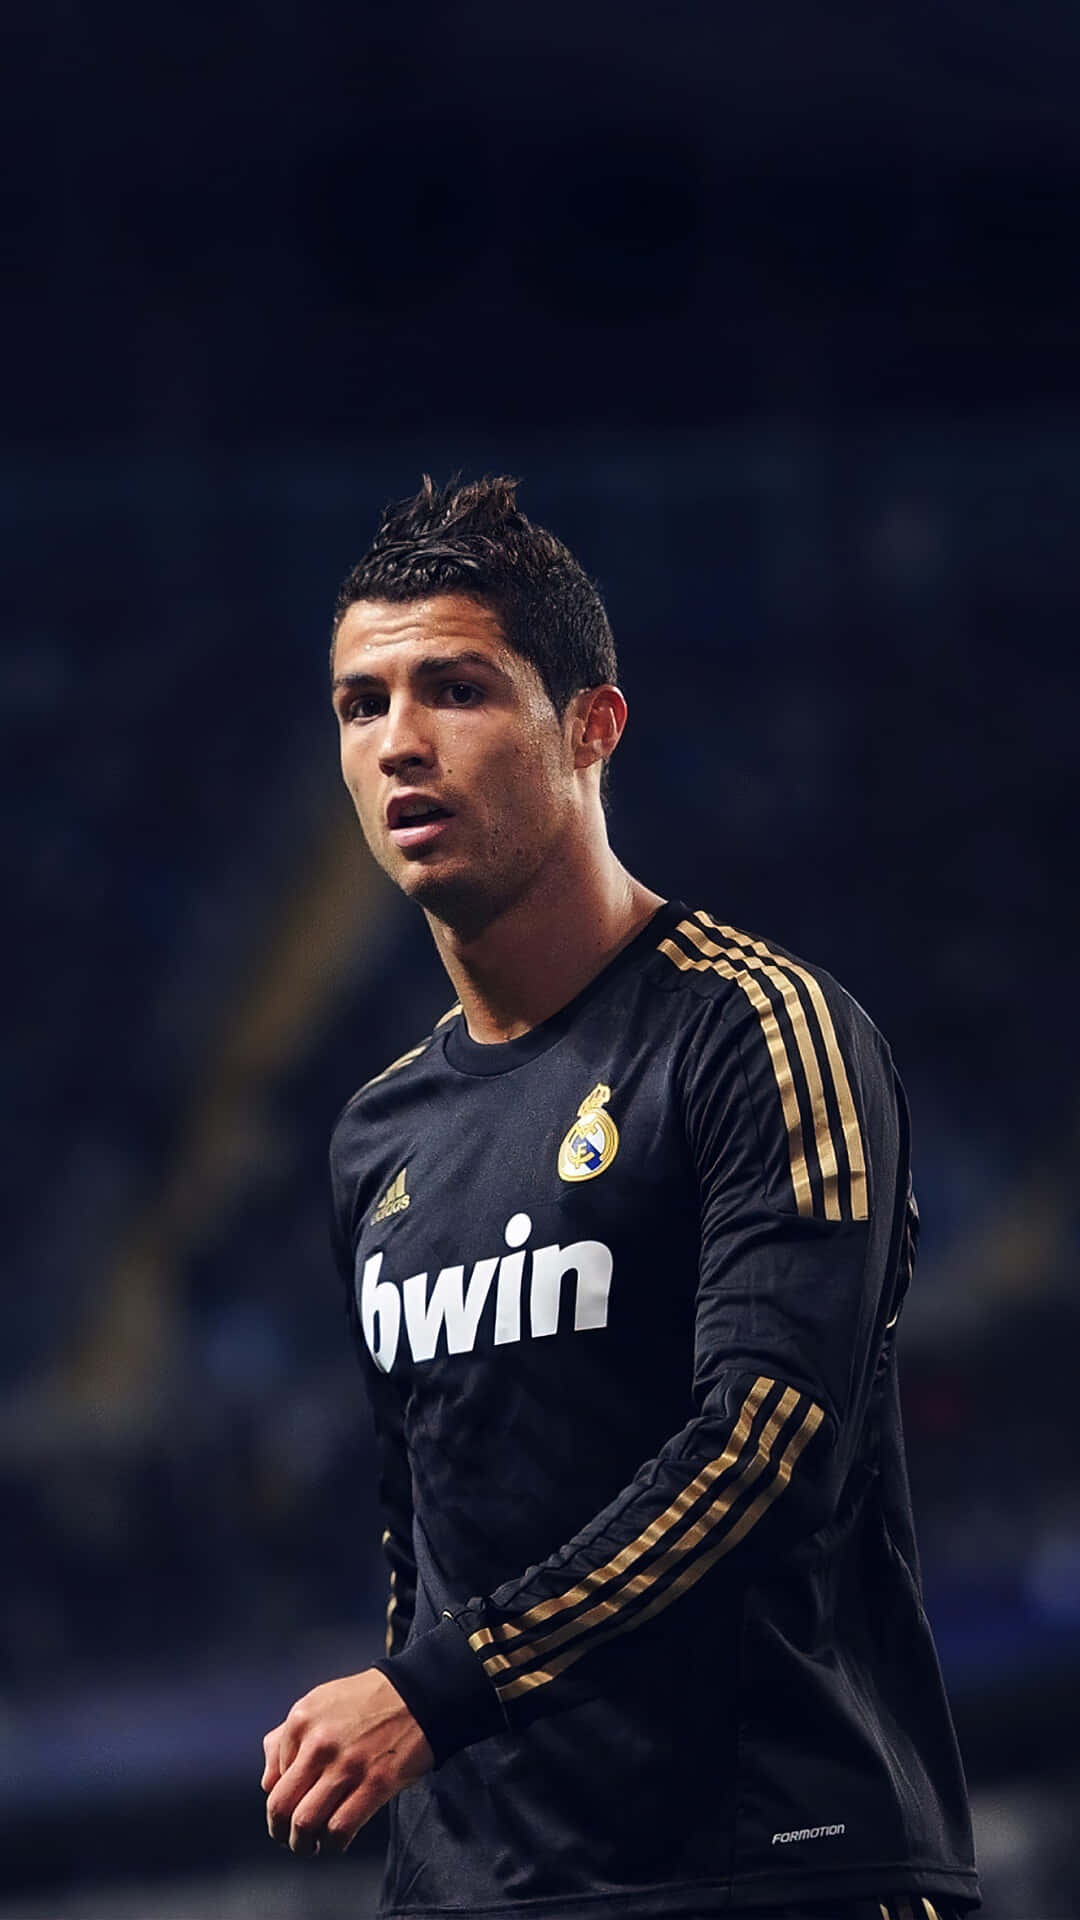 Cristiano Ronaldo sparker boldet med intens koncentration. Wallpaper